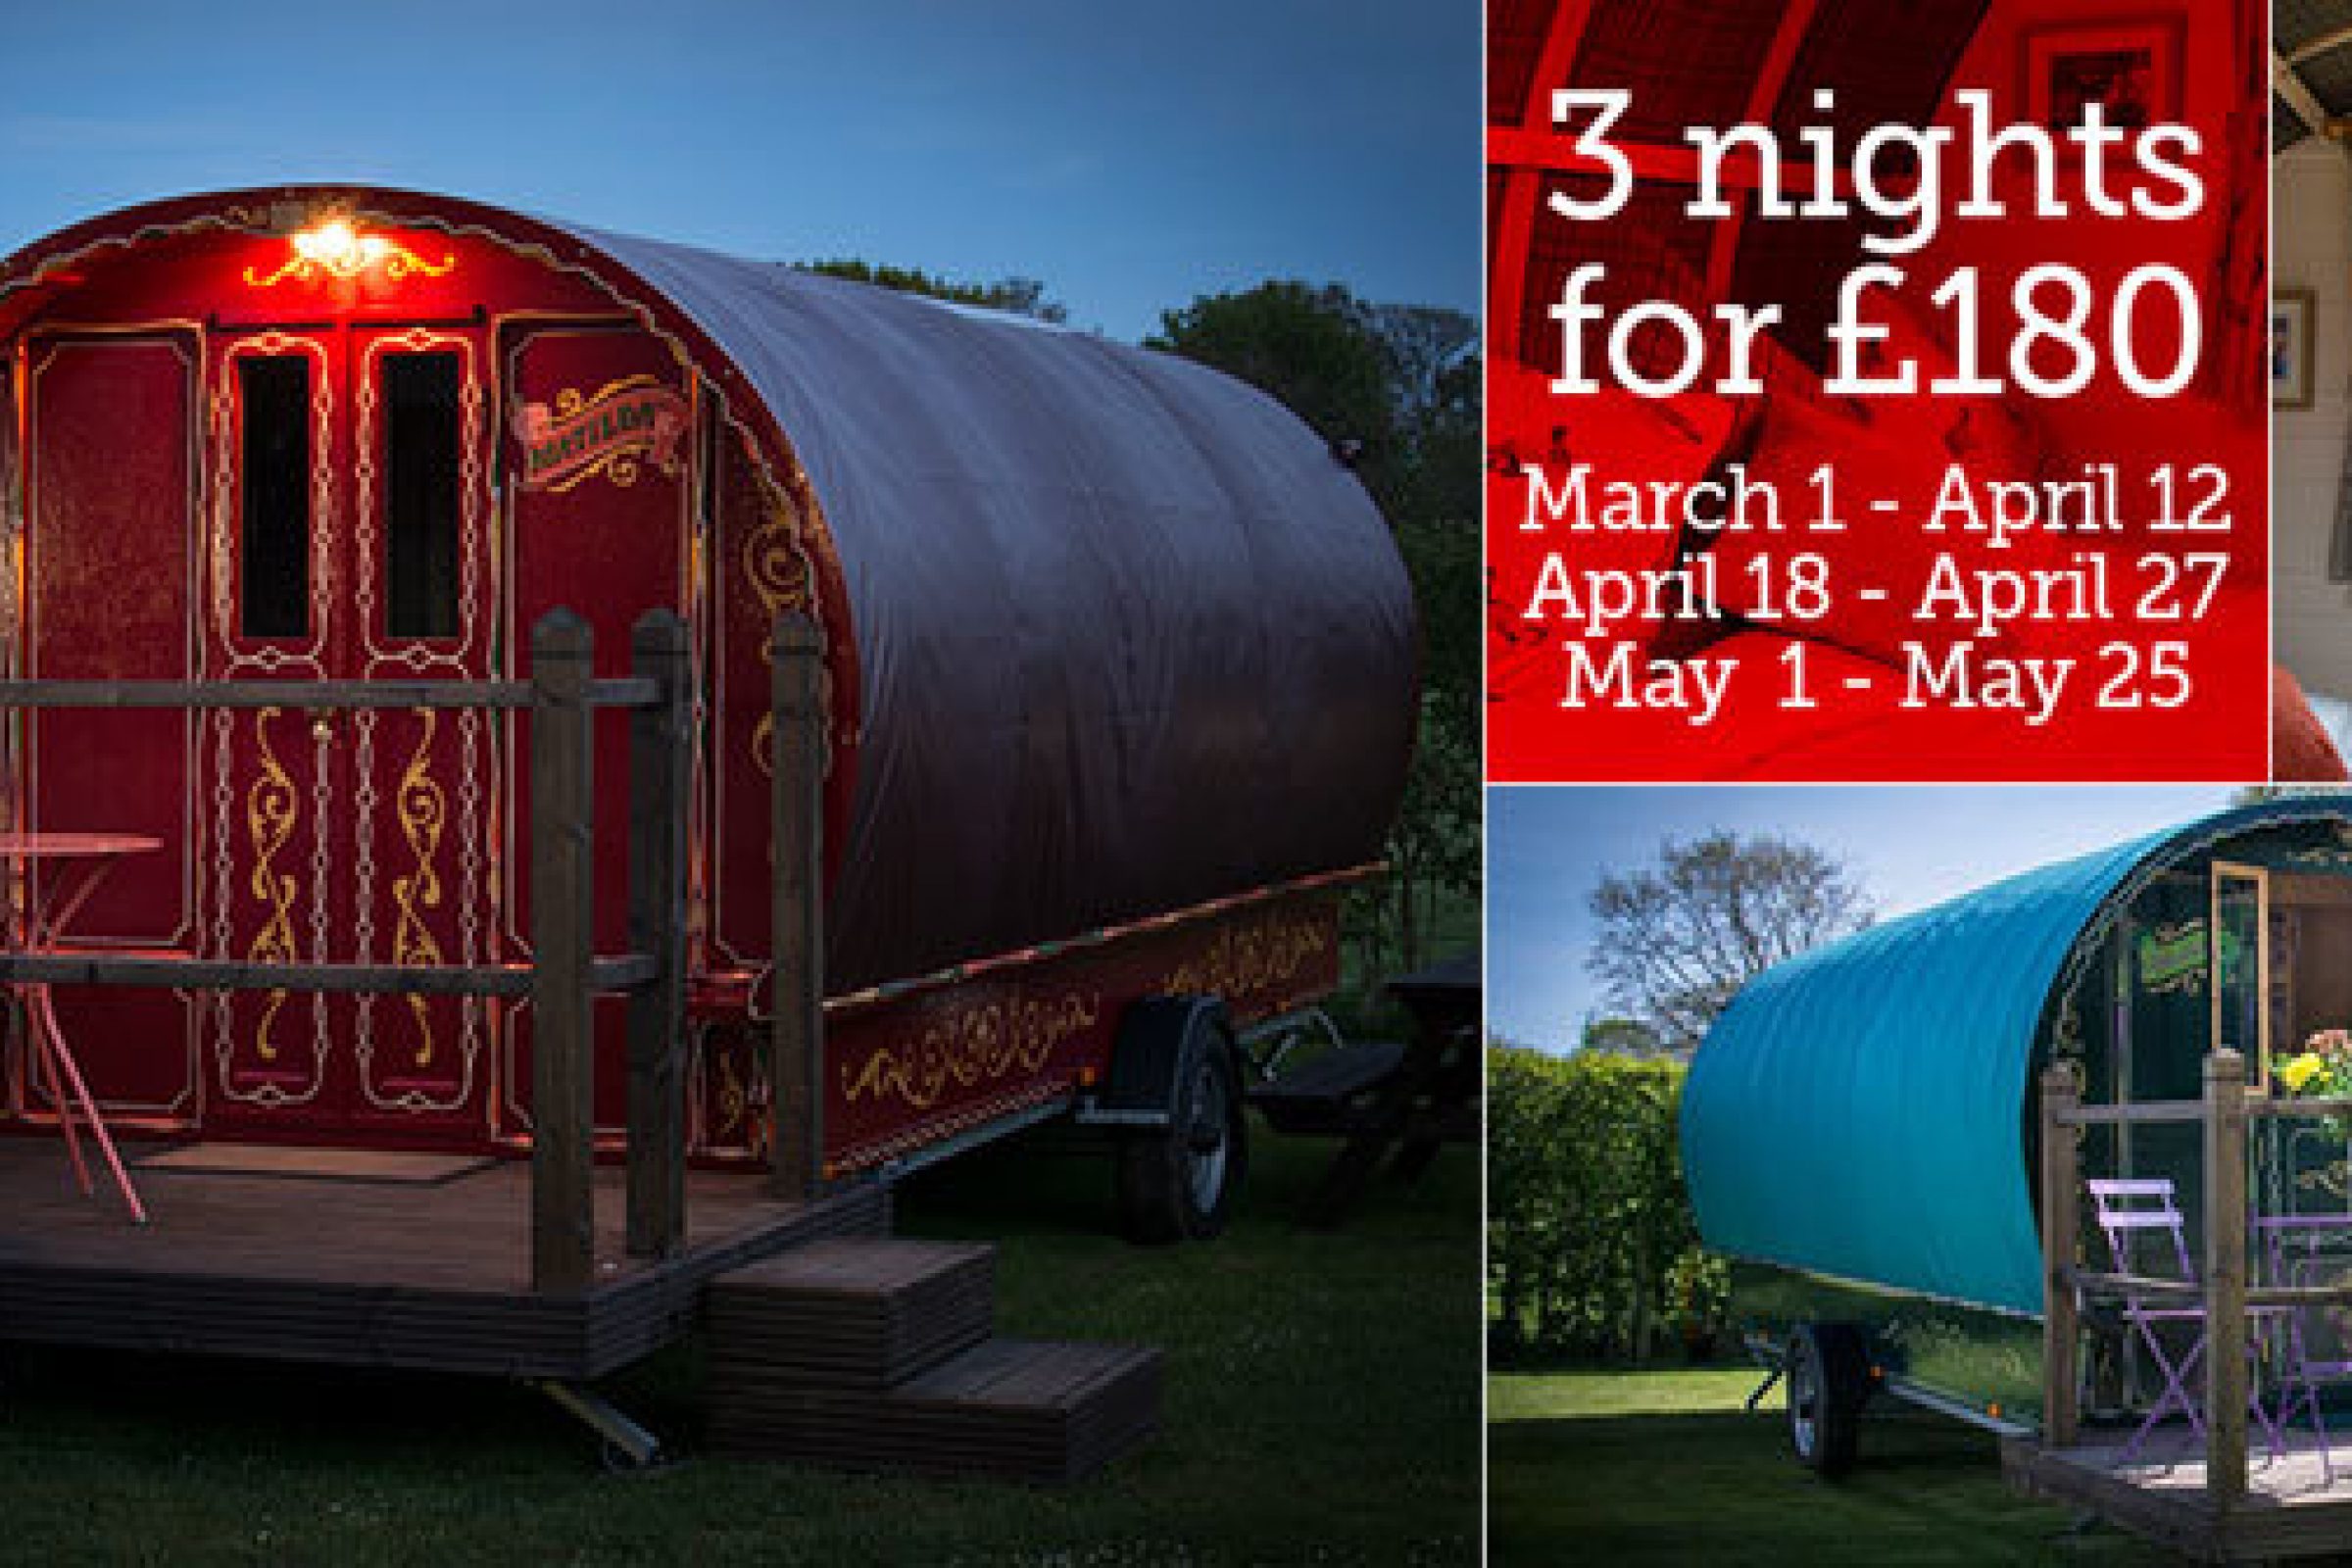 Best bargain ever for Dorset glampers! 3 nights for £180